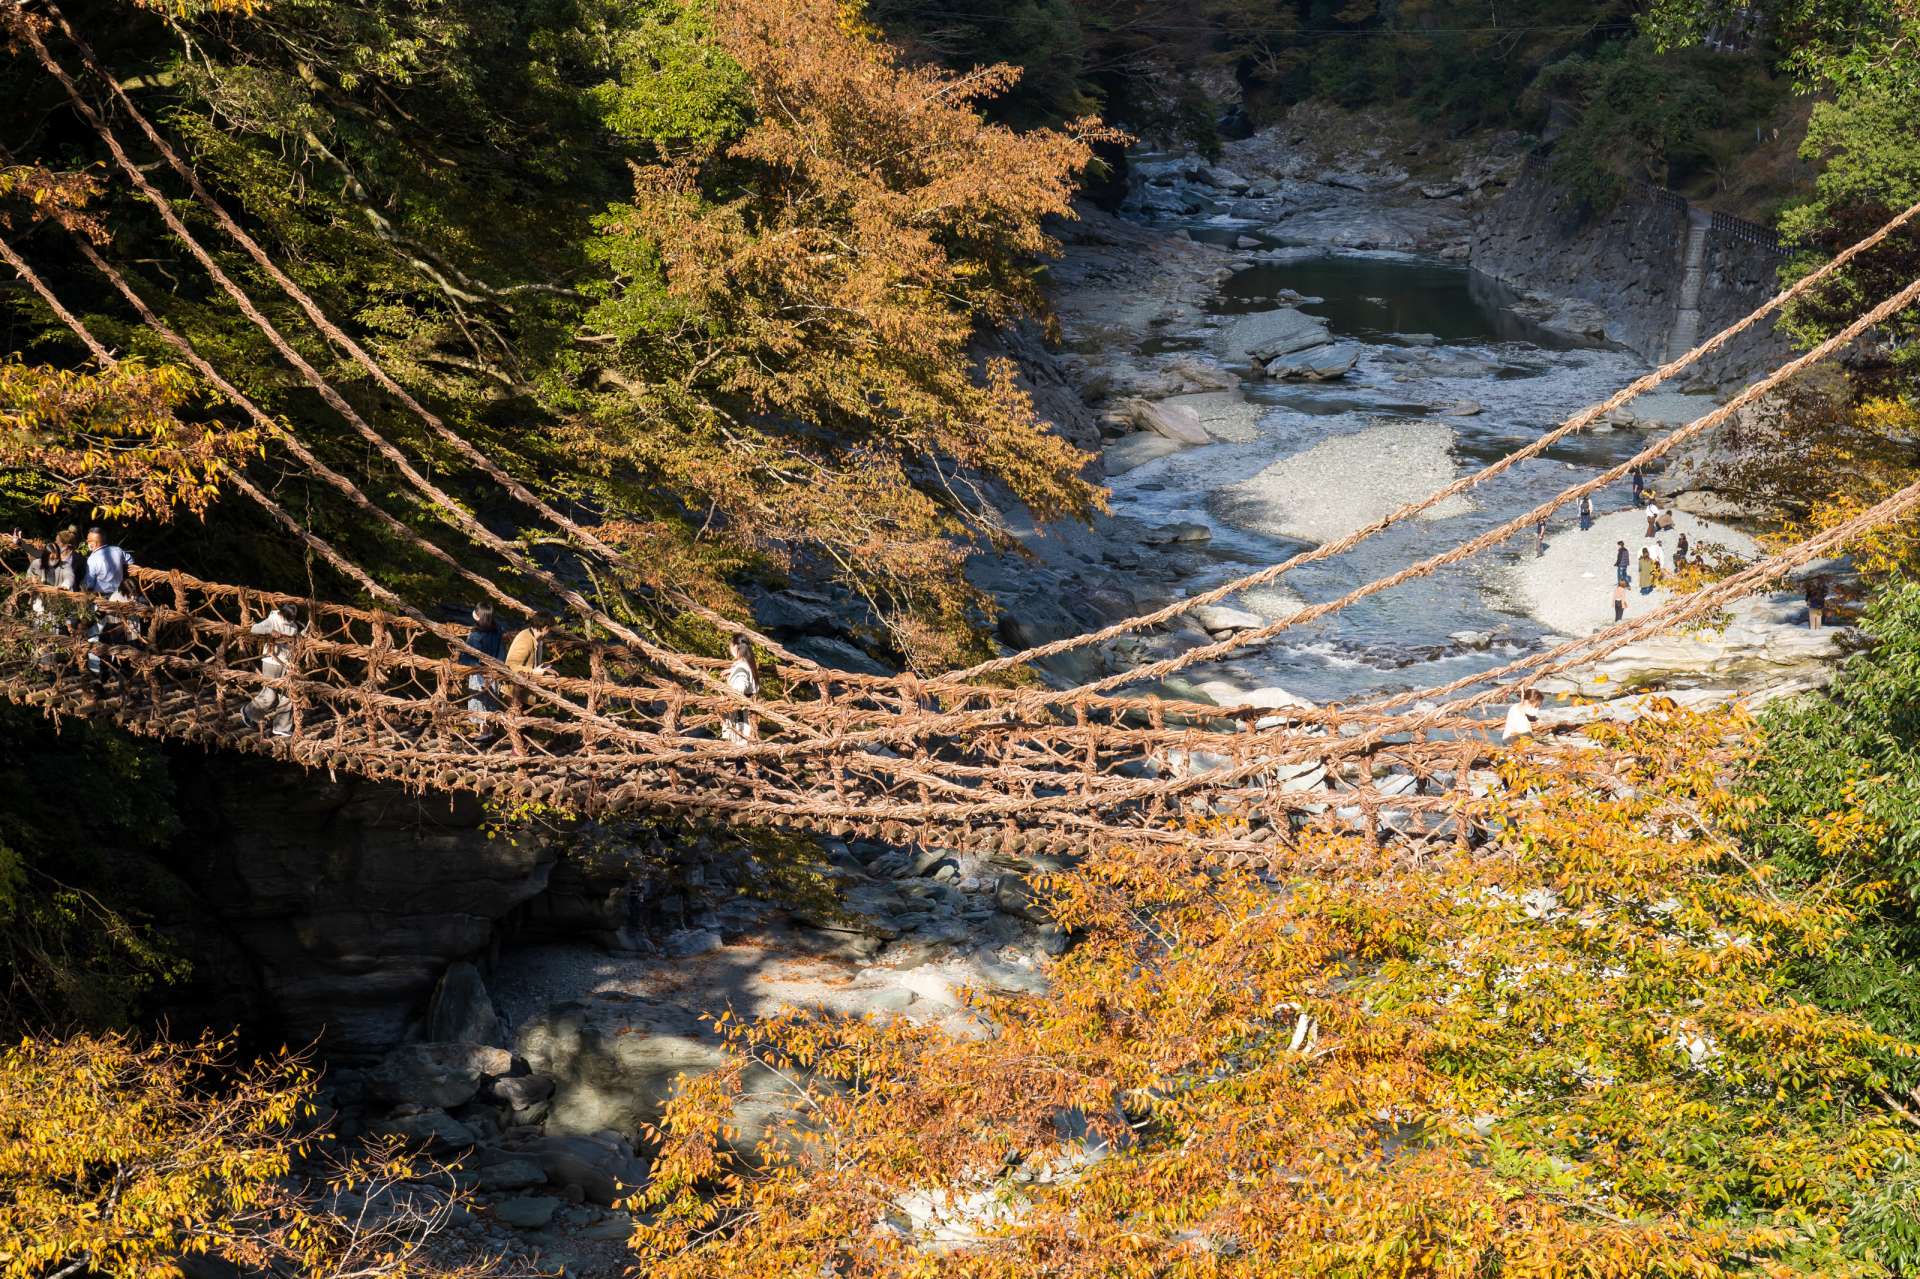 Iya’s kazurabashi vine bridge. Walk across it for a thrill and a delight.